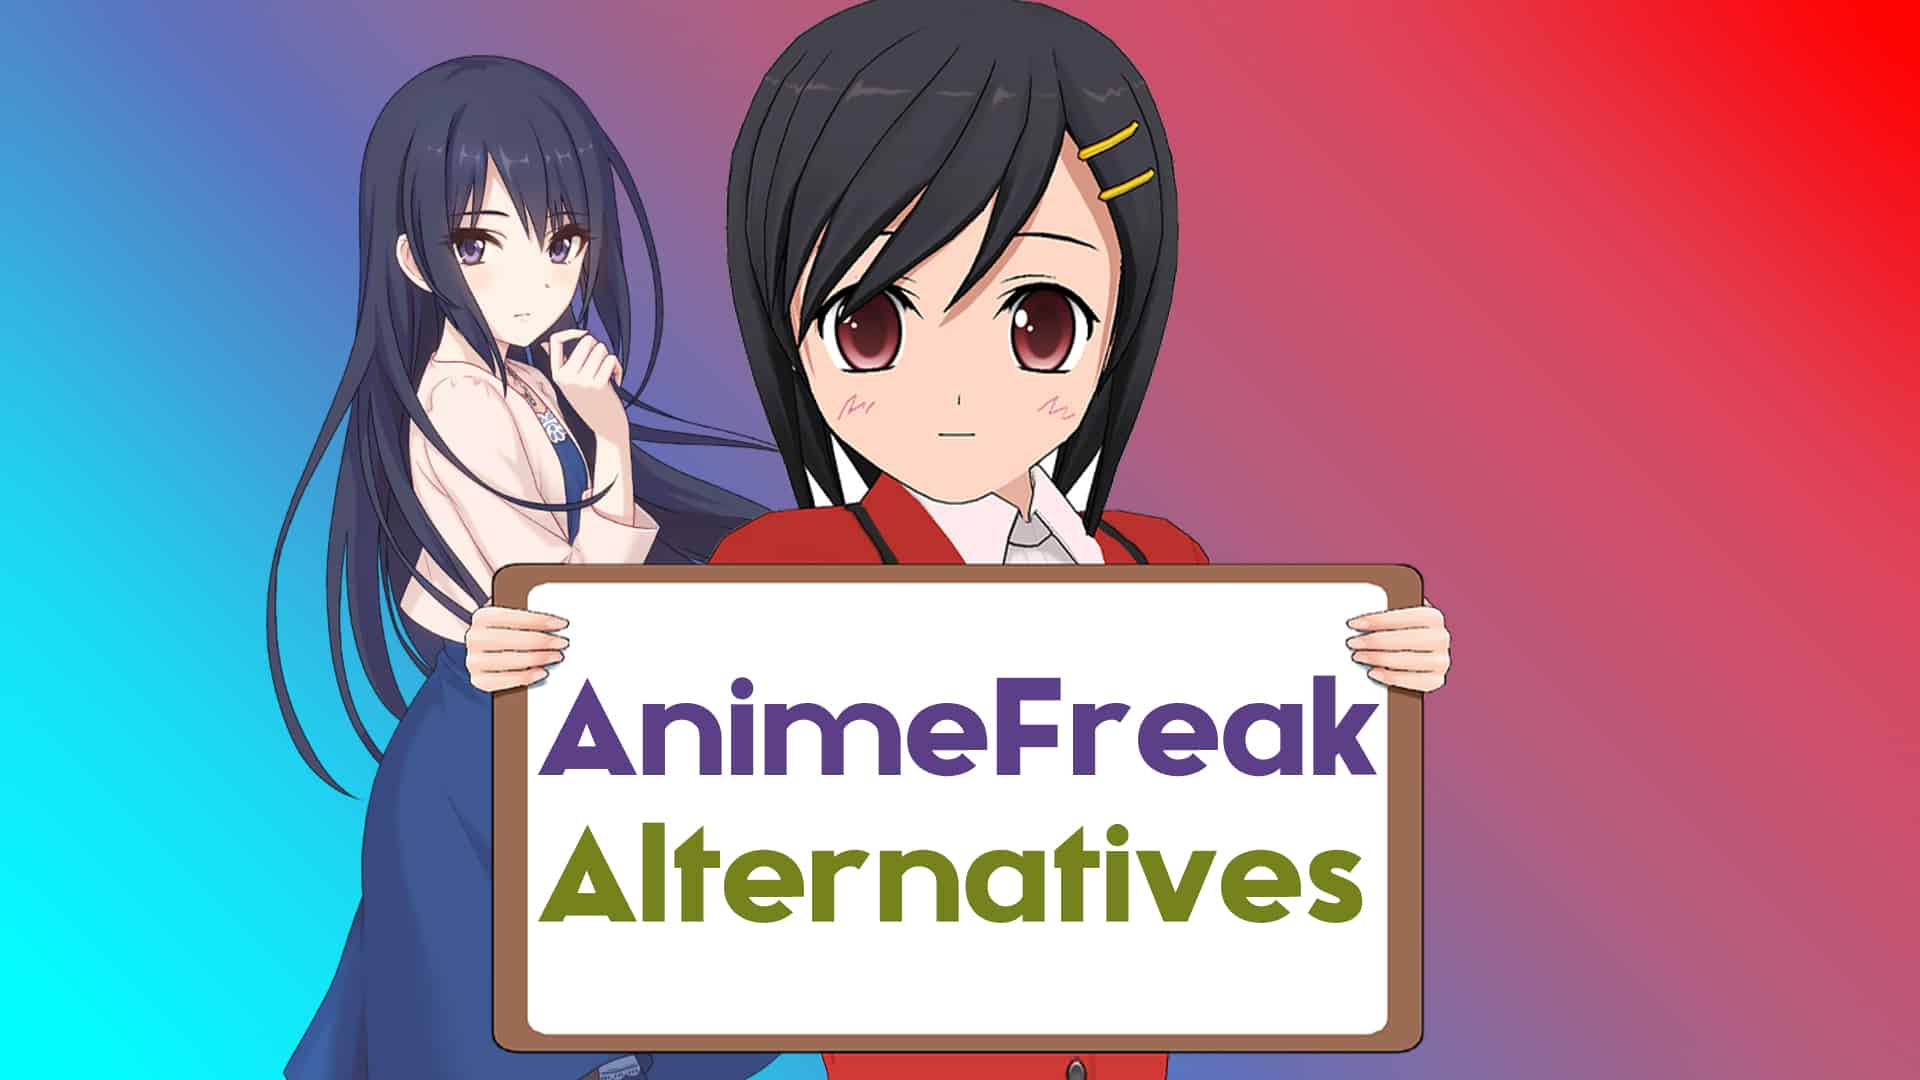 animefreakalternatives